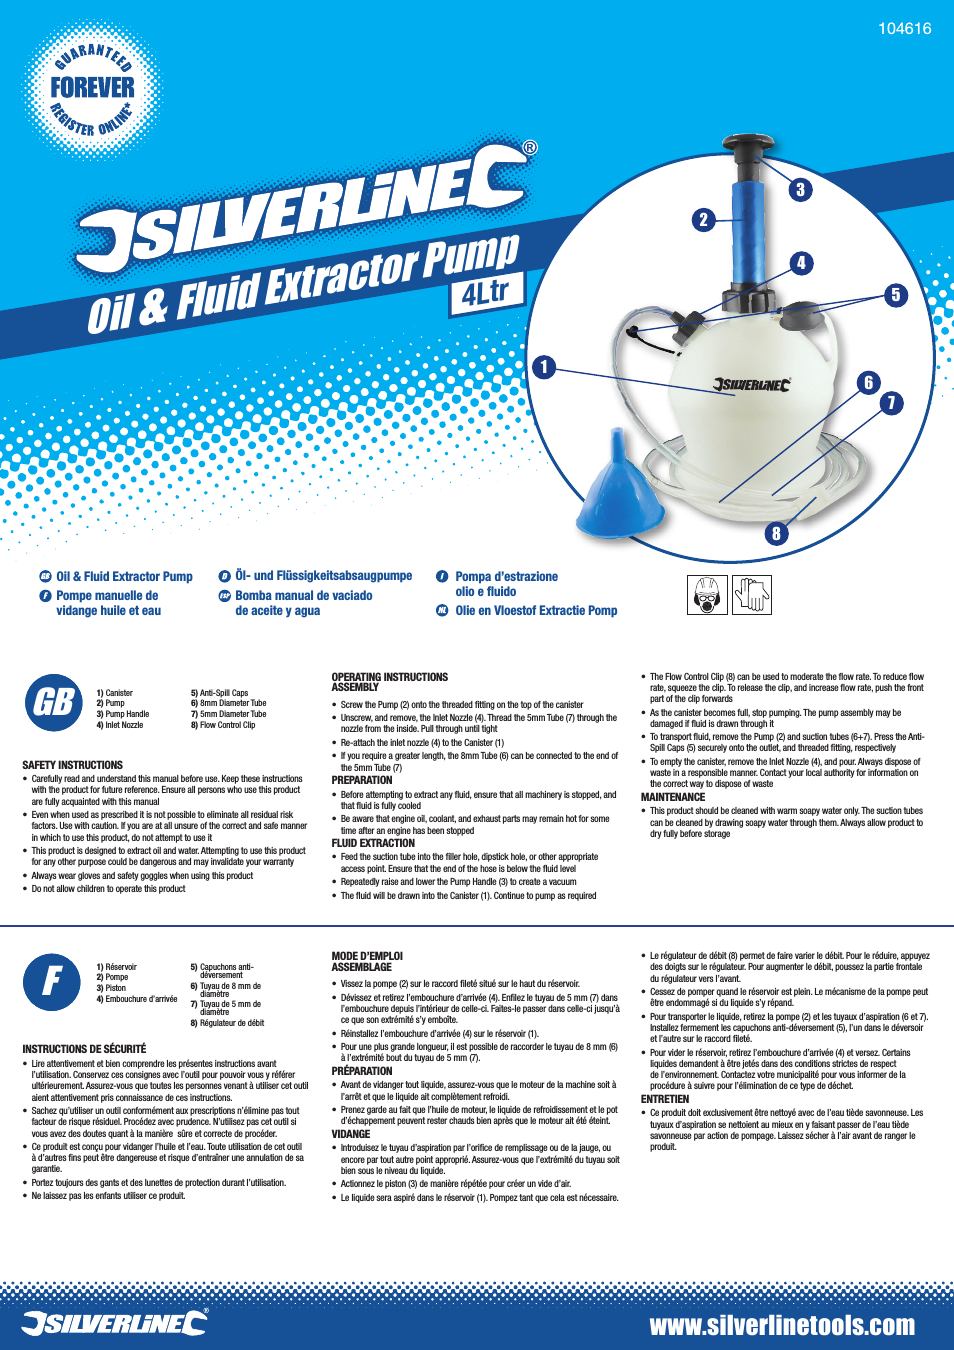 Oil & Fluid Extractor Pump 4Ltr